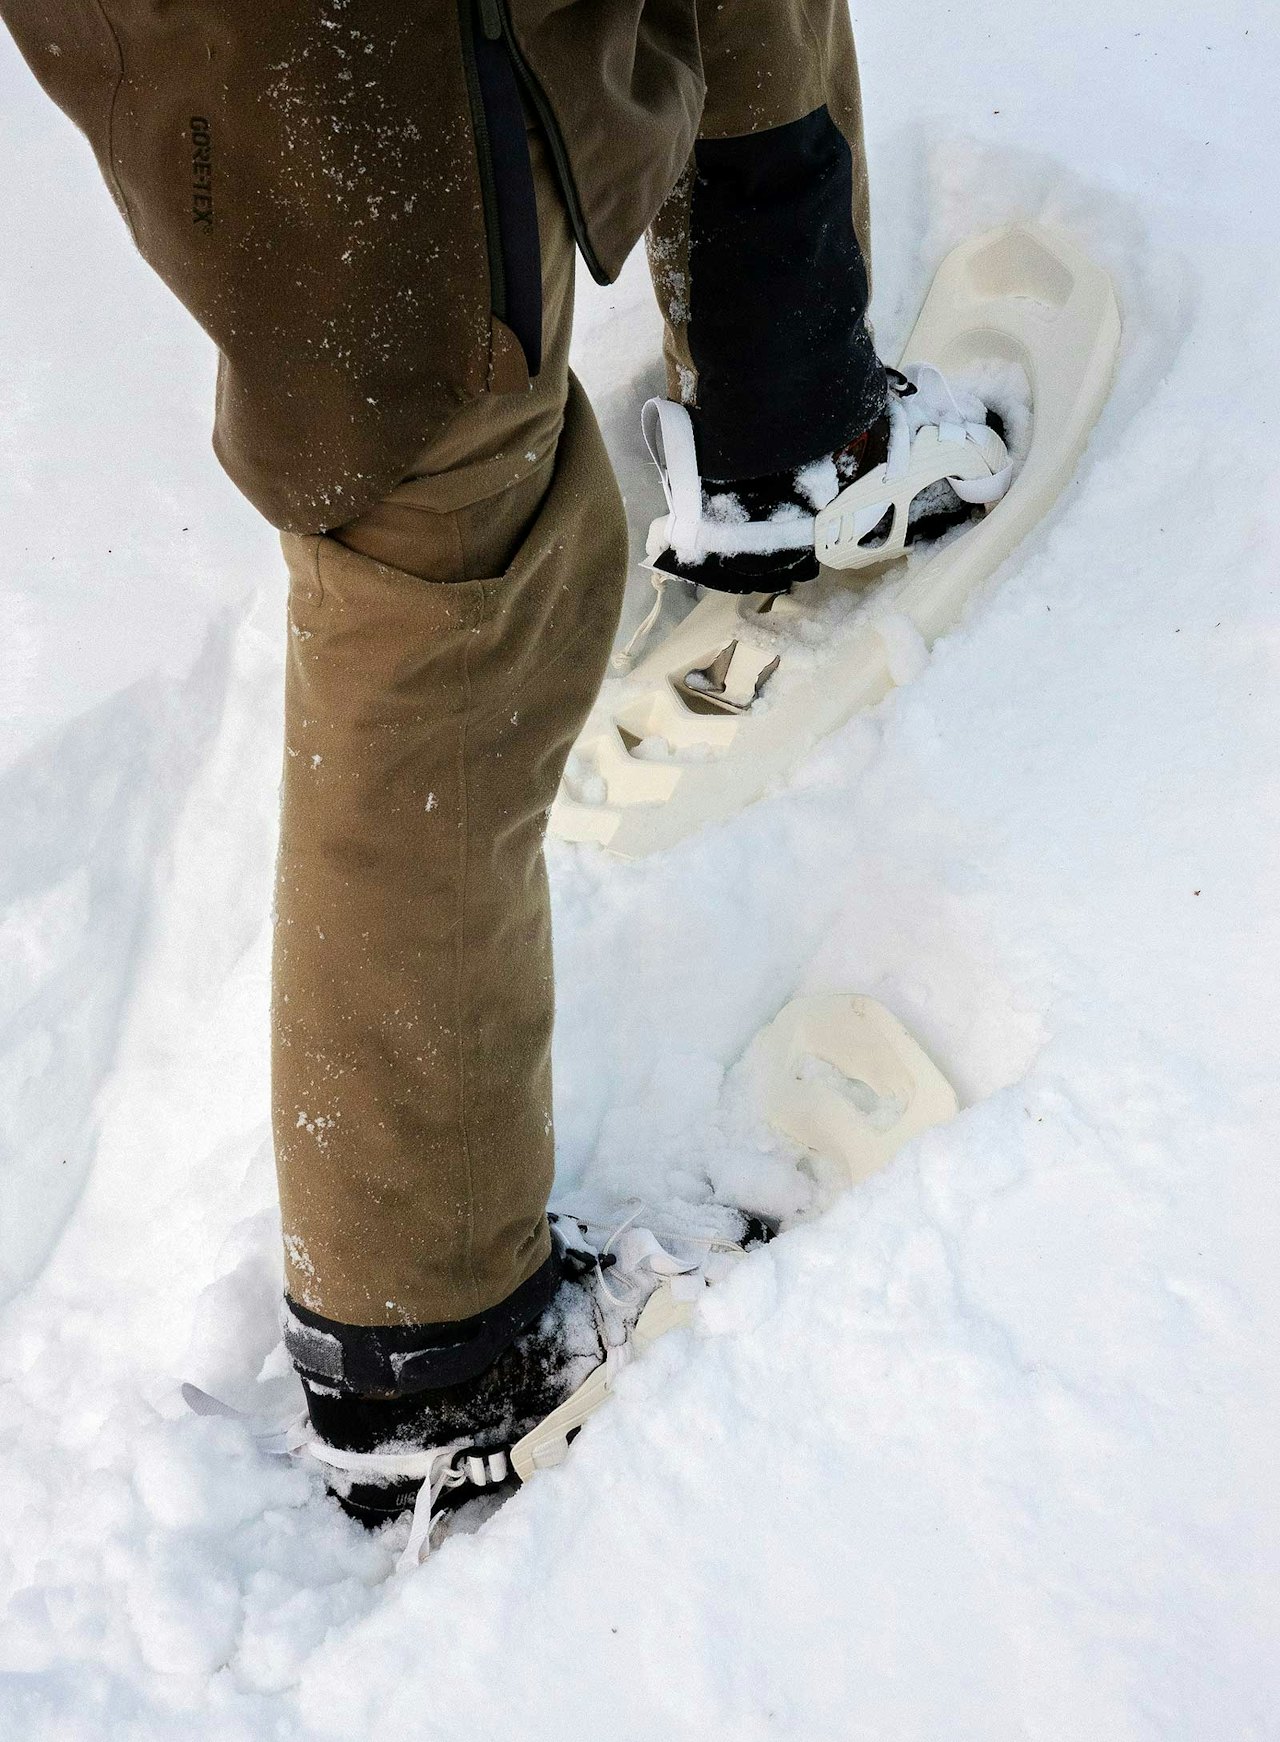 Fimbulvetr Trail-X truger testes i snøen